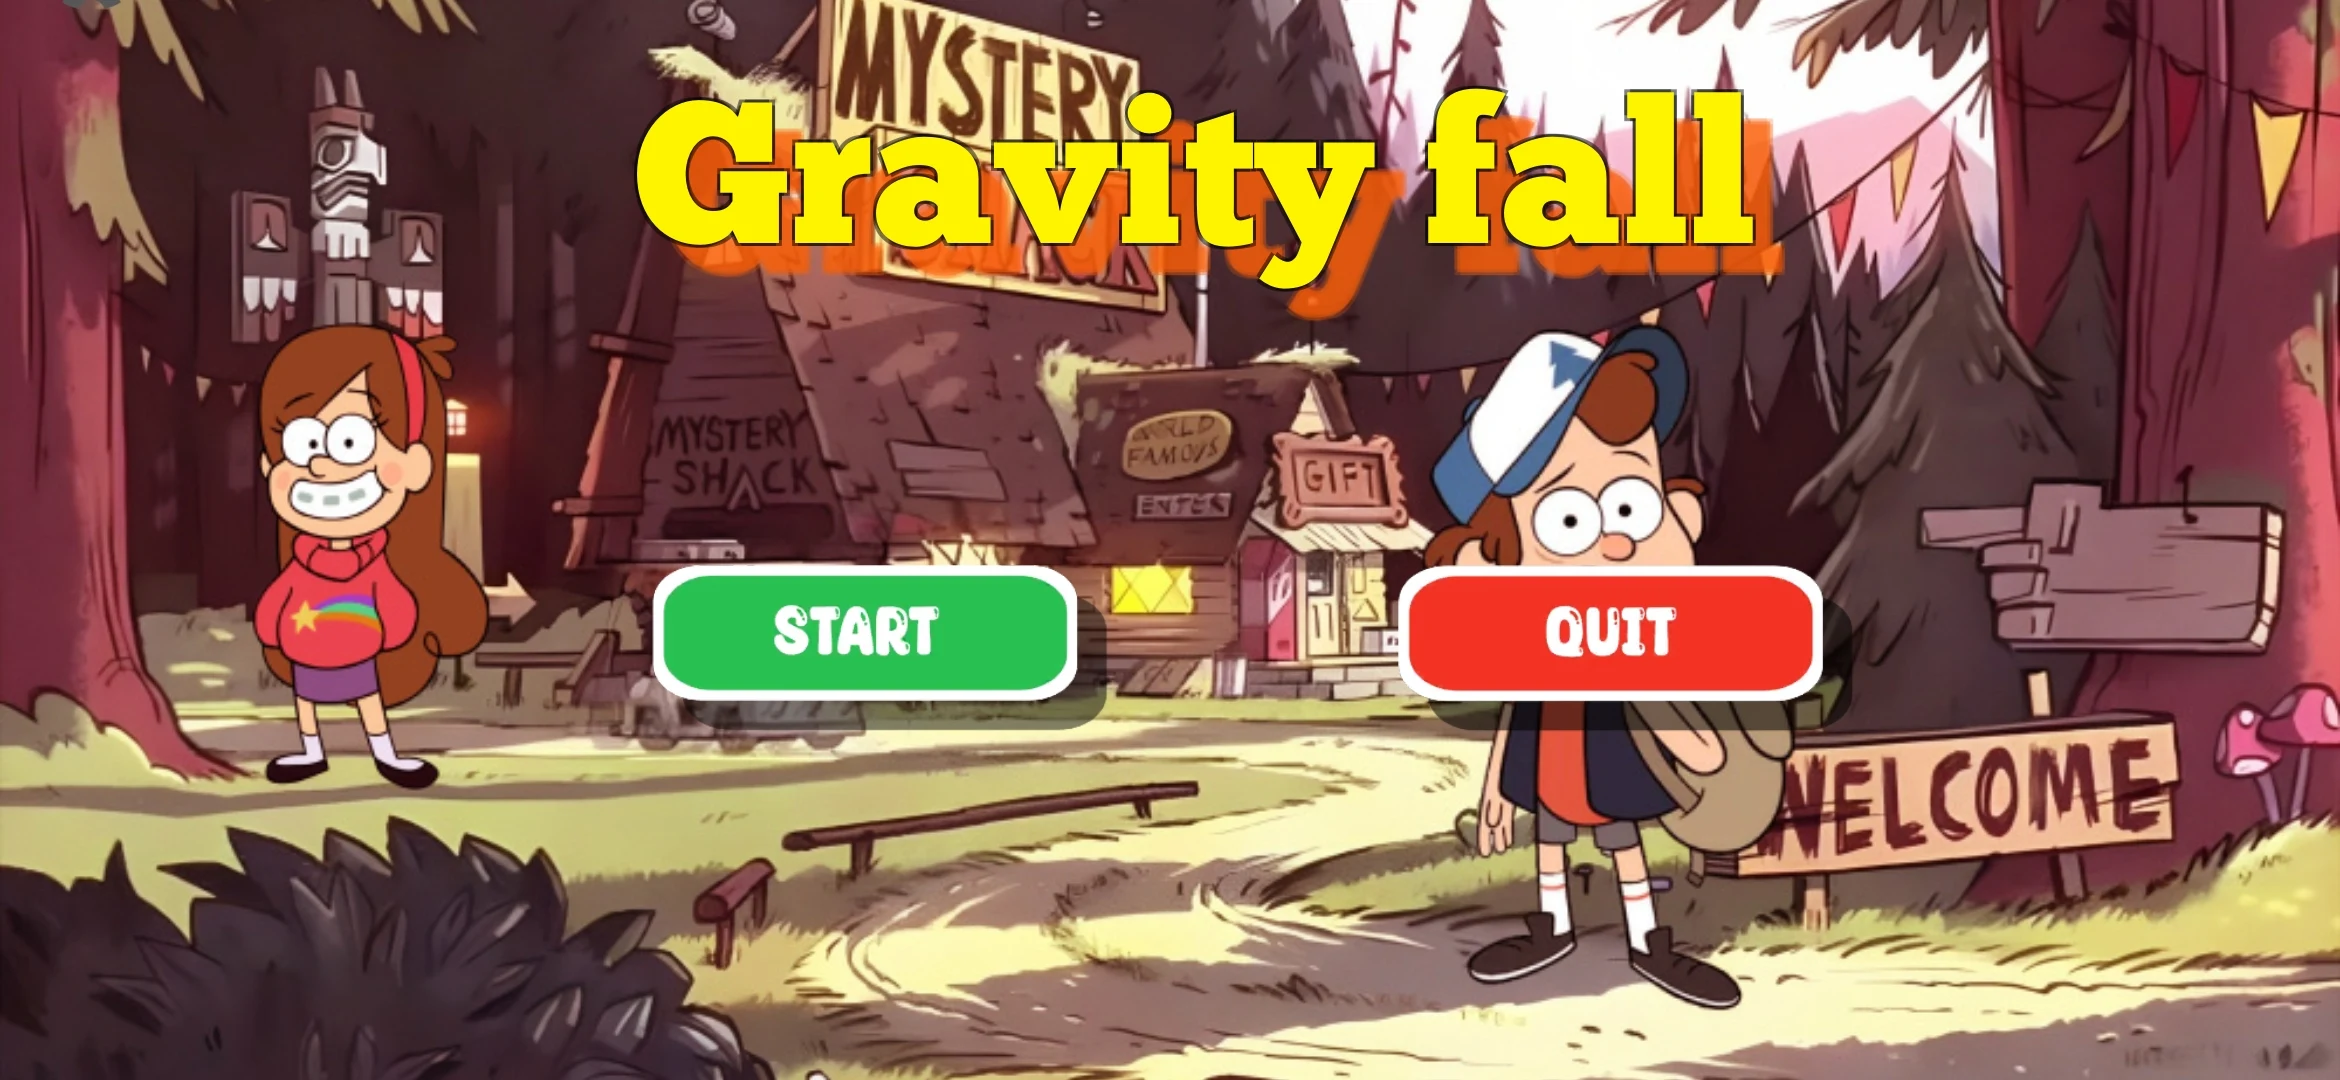 Gravity fall Game